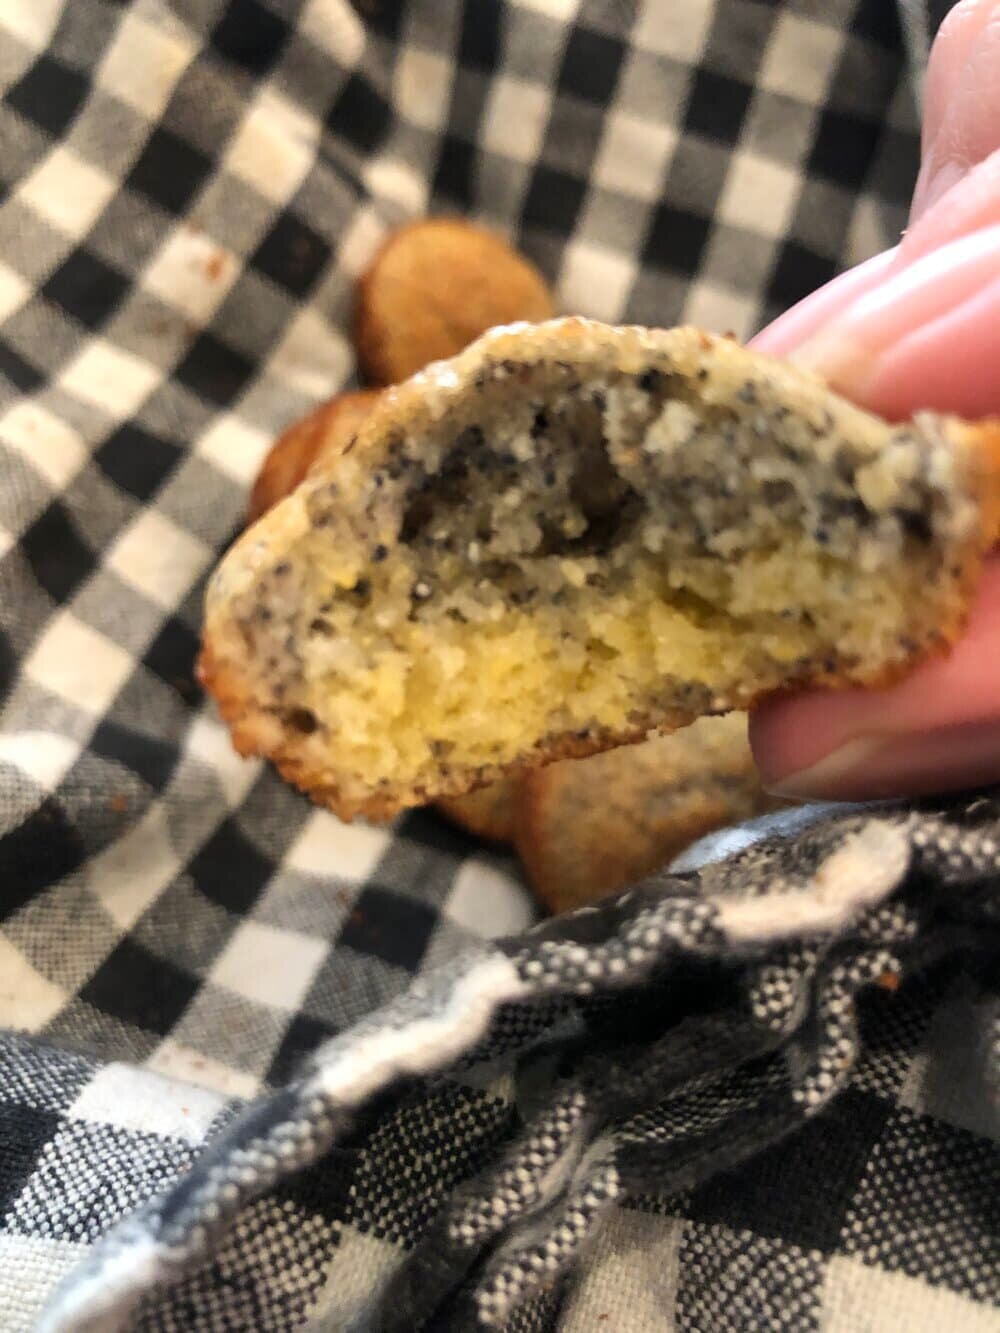 Found the half blue and half yellow cornmeal gluten free muffin